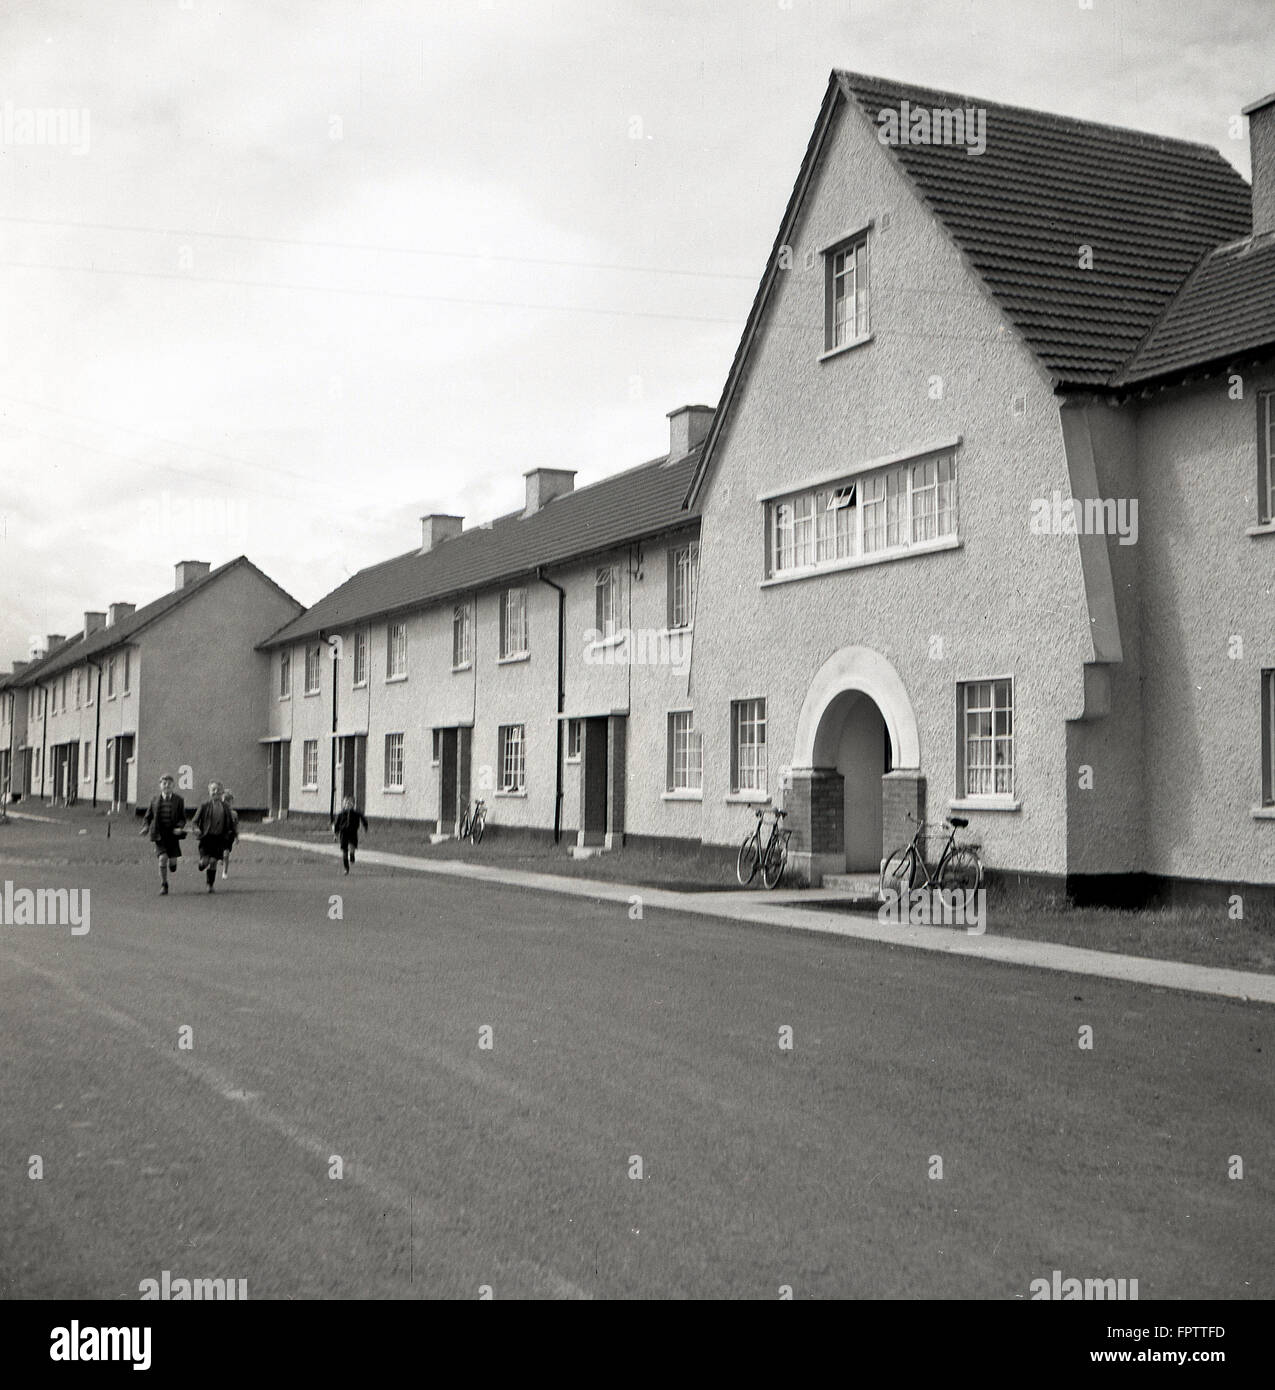 1950s historical, new housing estate at Clane, County Kildare, Ireland  Stock Photo - Alamy